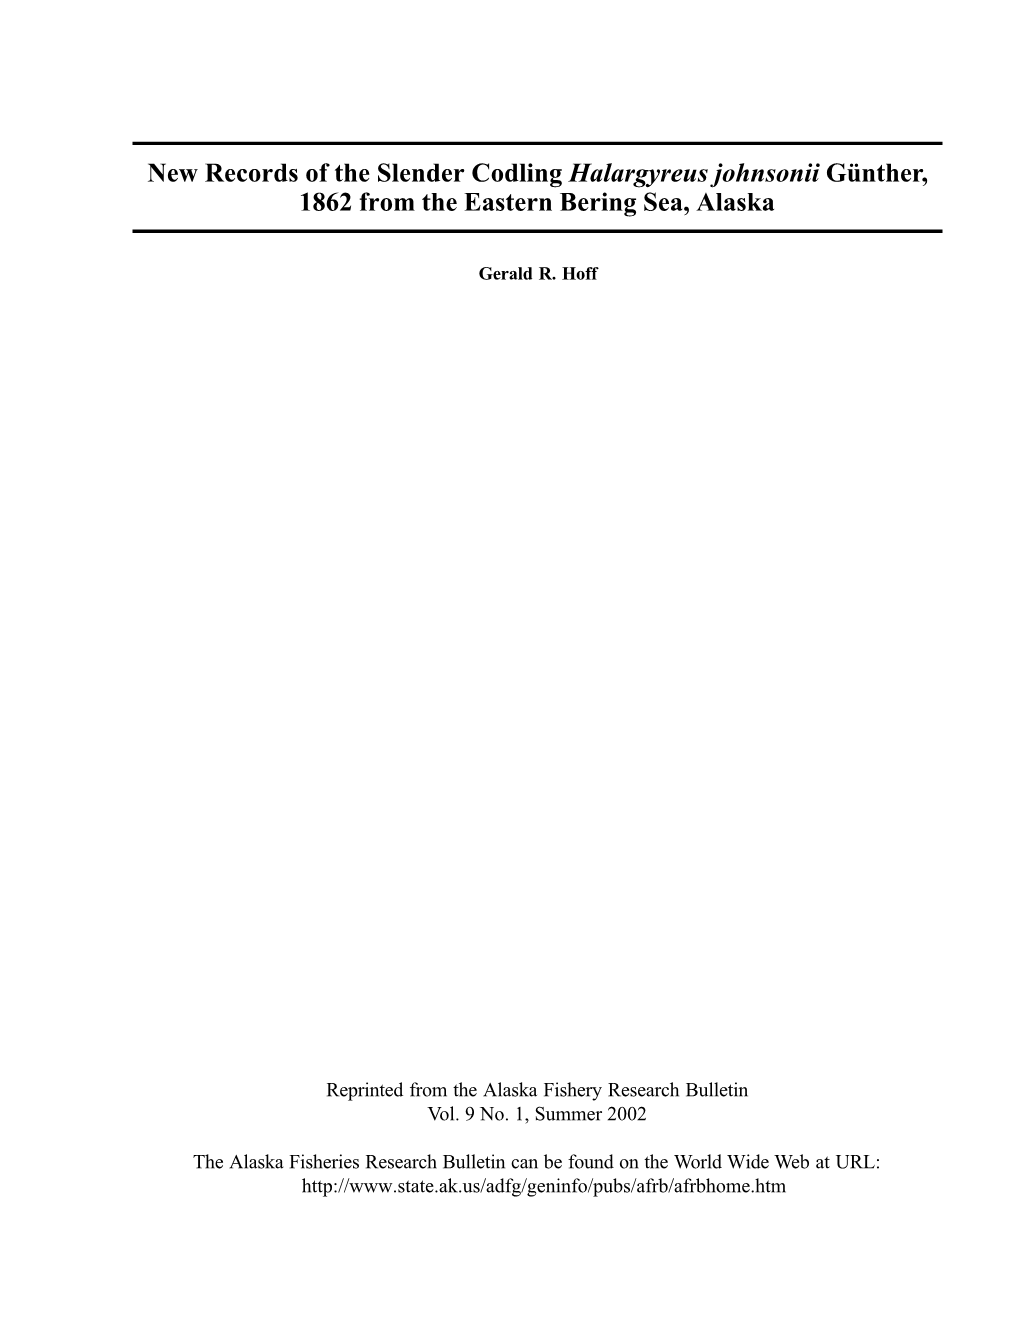 New Records of the Slender Codling Halargyreus Johnsonii Gunther, 1862 • Hoff 63